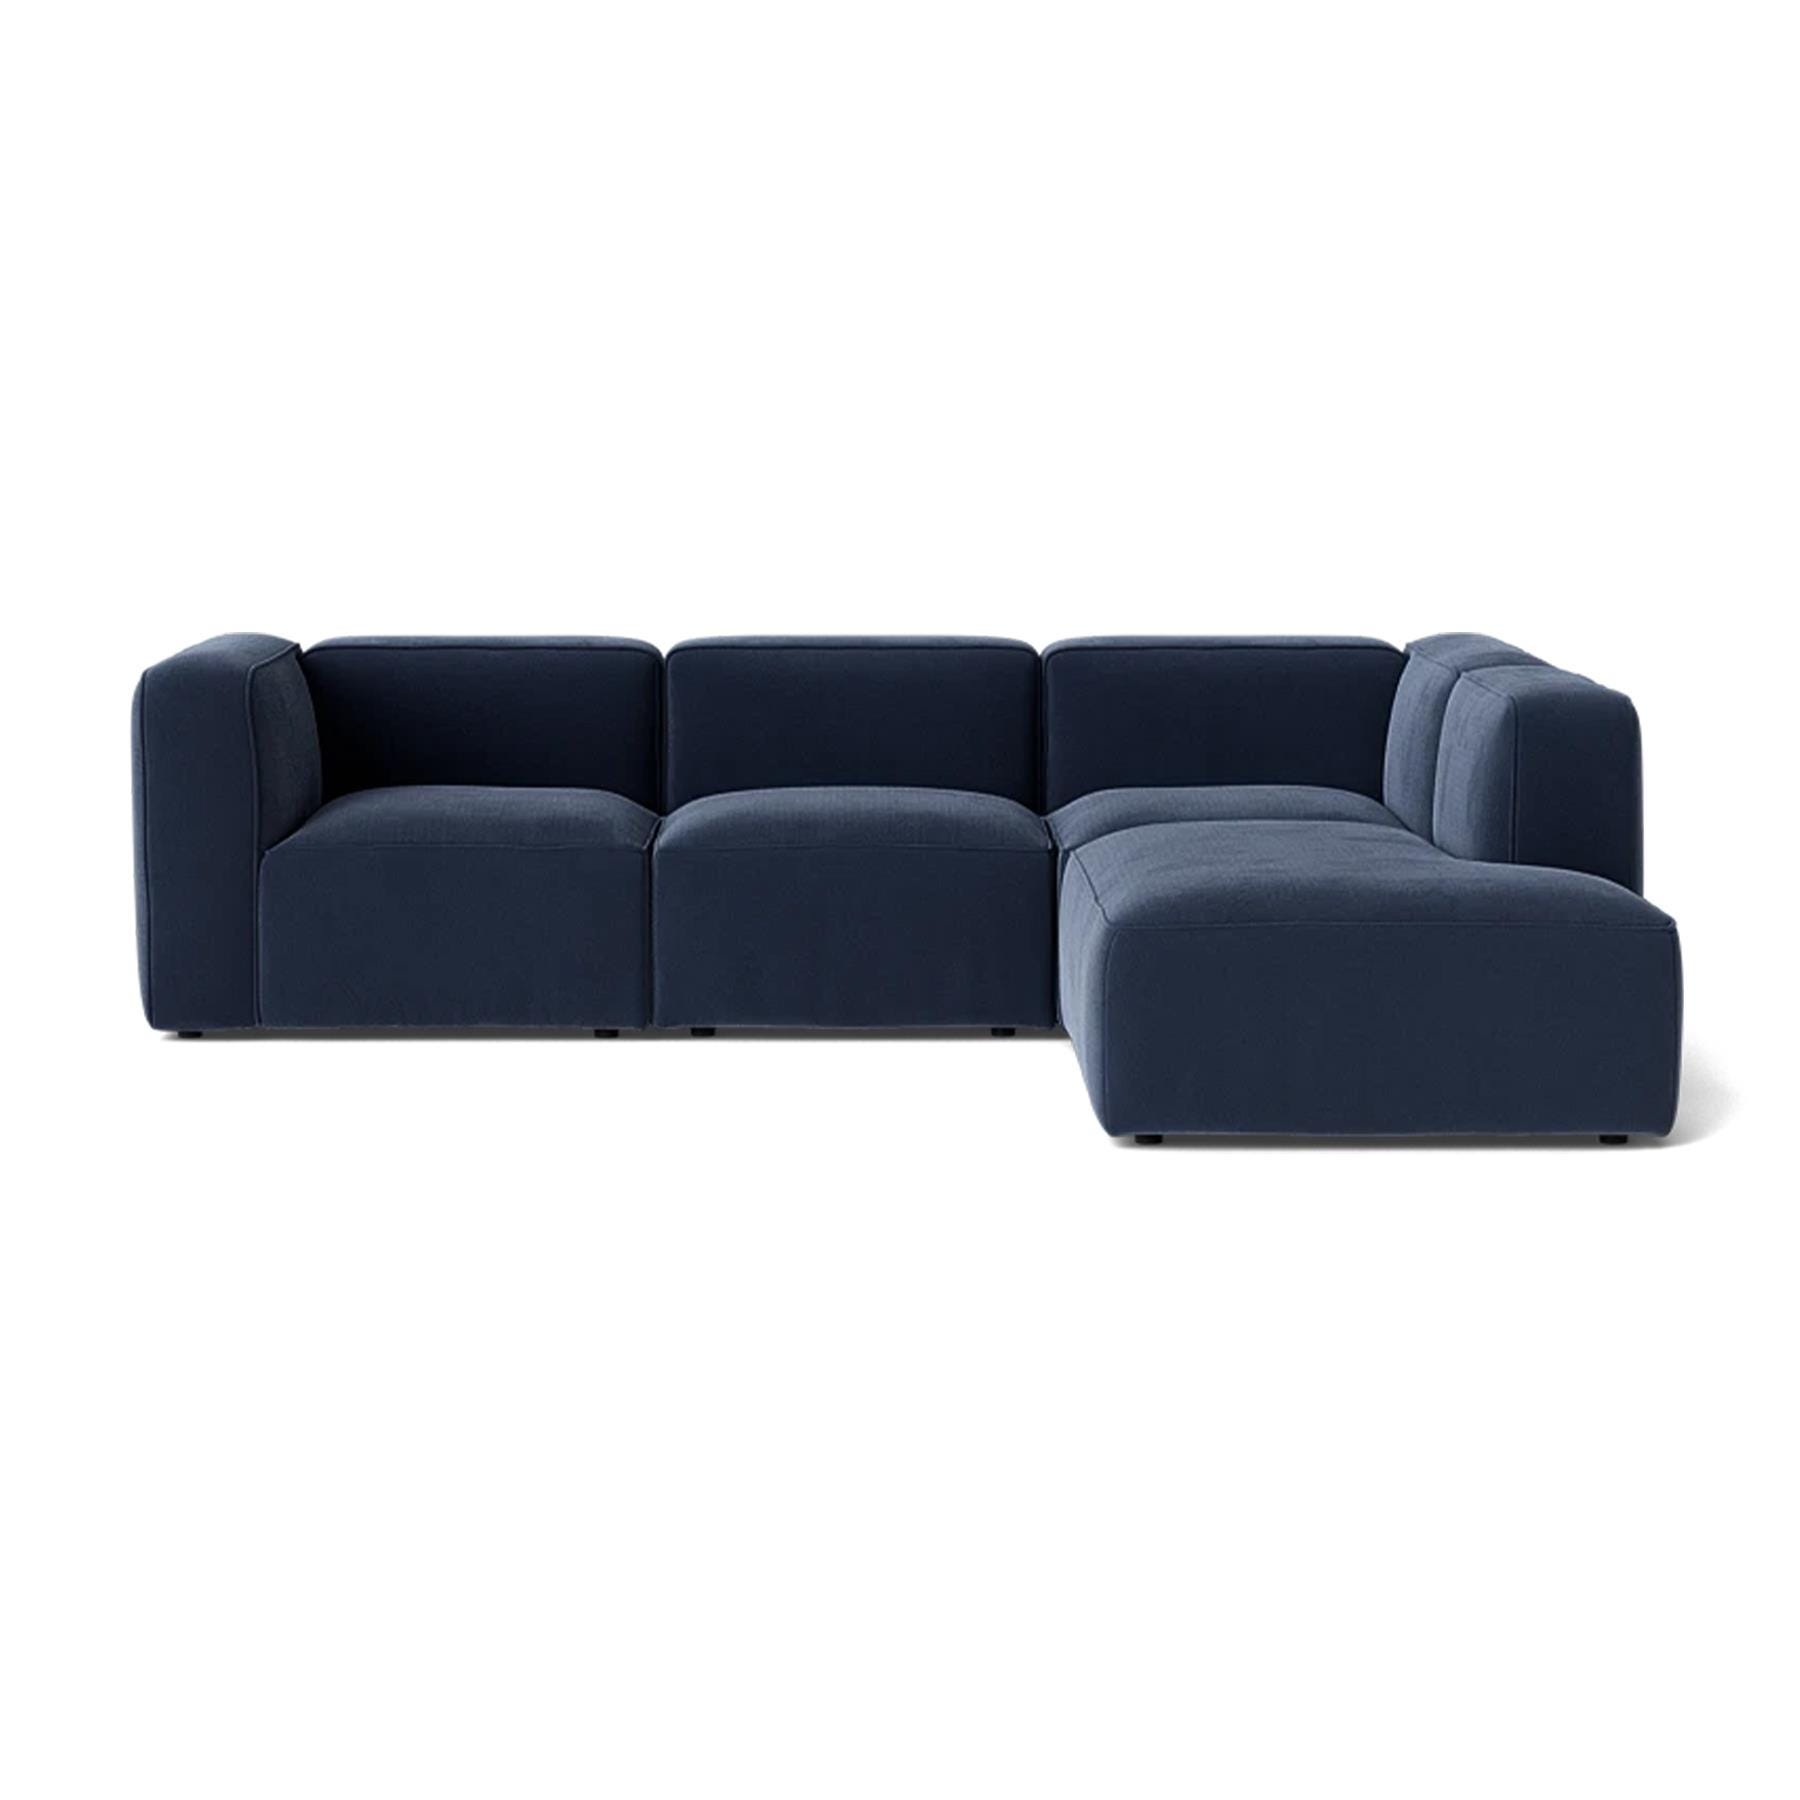 Make Nordic Basecamp Small Family Sofa Nordic Velvet 220 Right Blue Designer Furniture From Holloways Of Ludlow